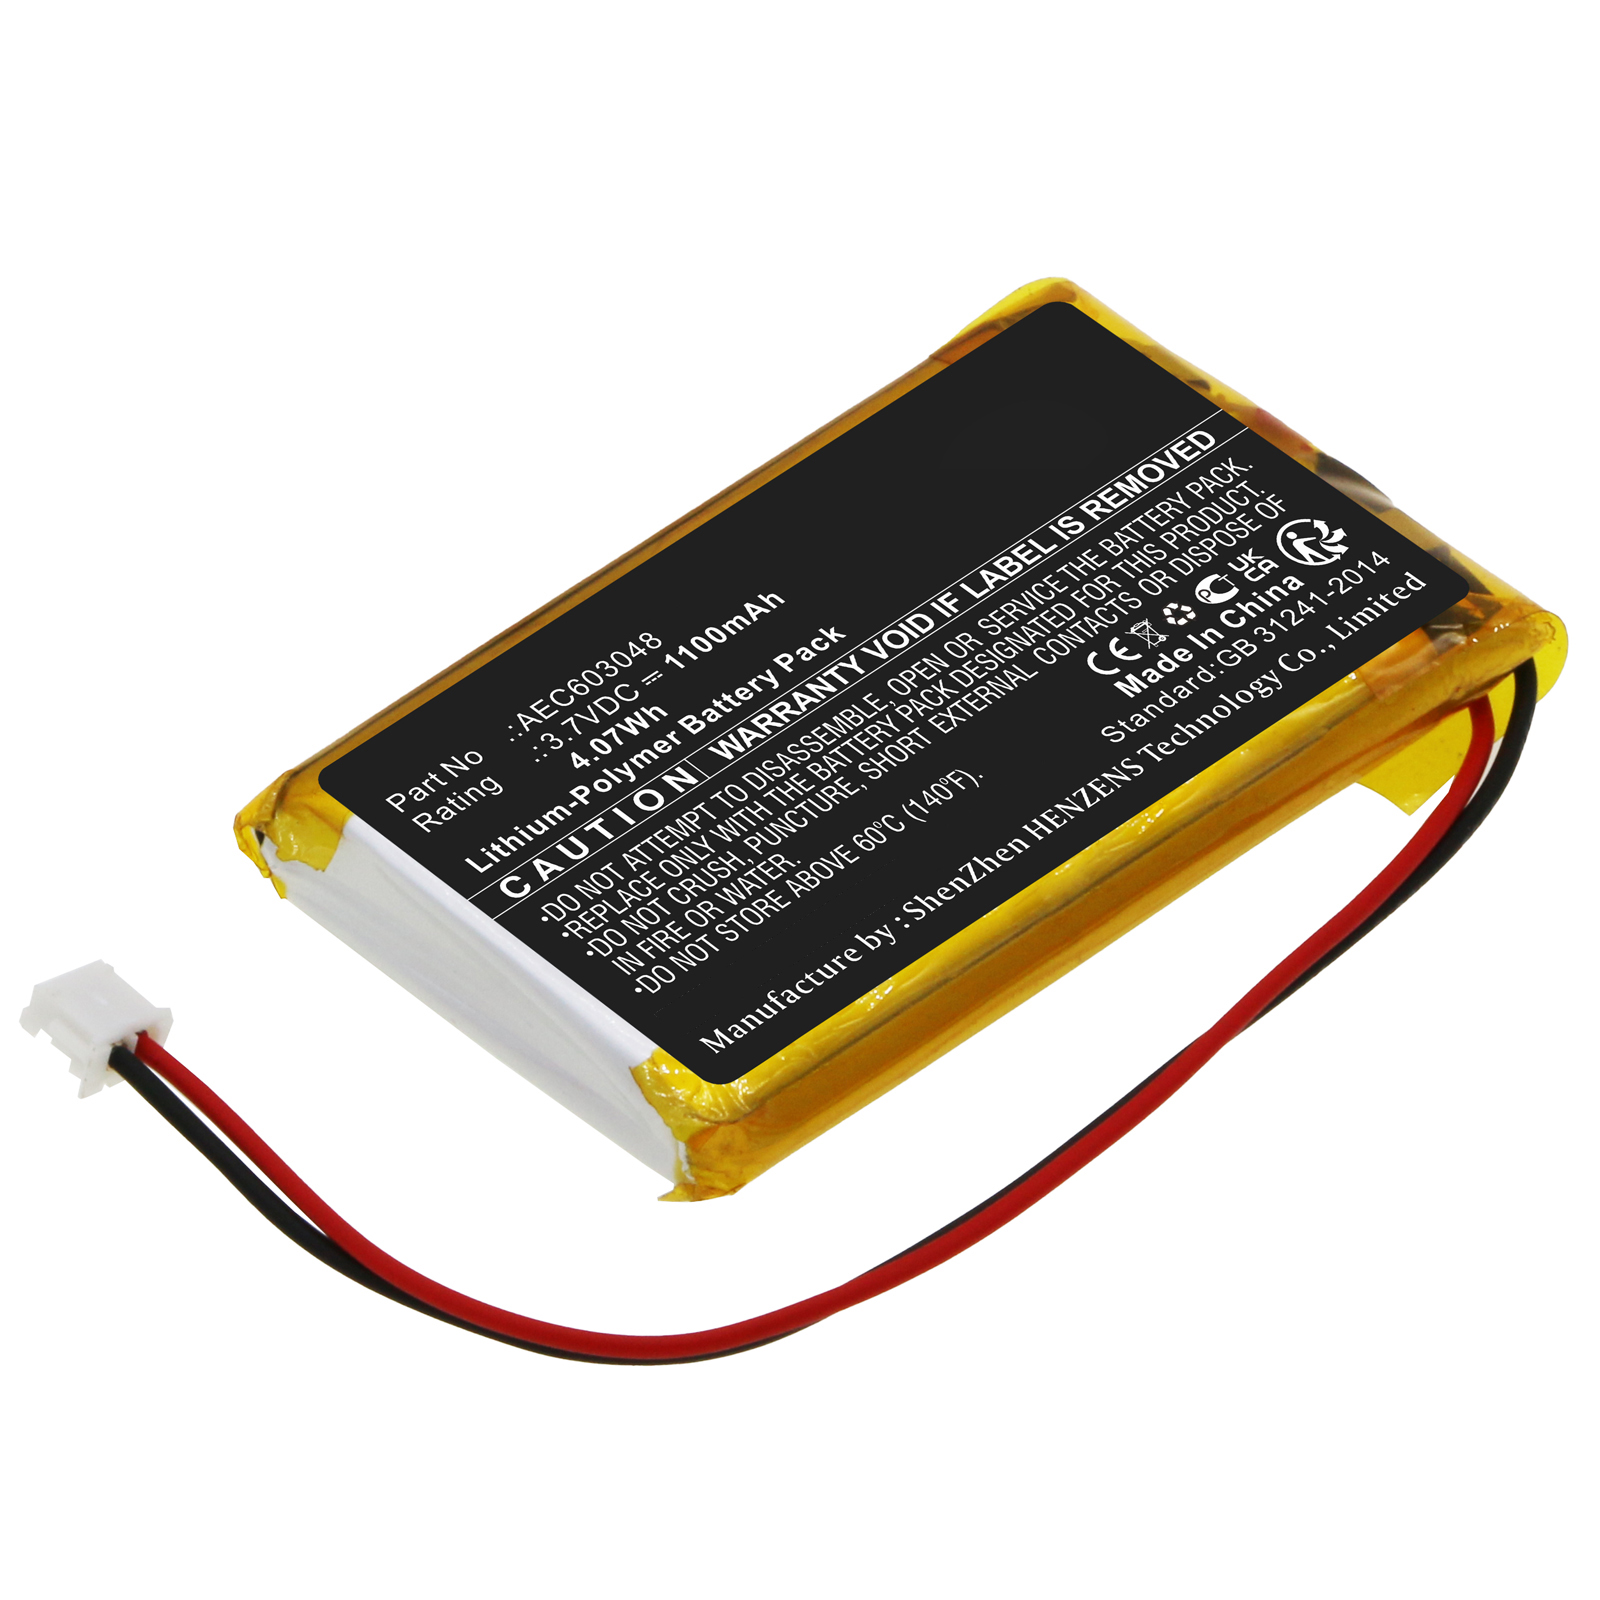 Synergy Digital 2-Way Radio Battery, Compatible with SIMRAD AEC603048 2-Way Radio Battery (Li-Pol, 3.7V, 1100mAh)